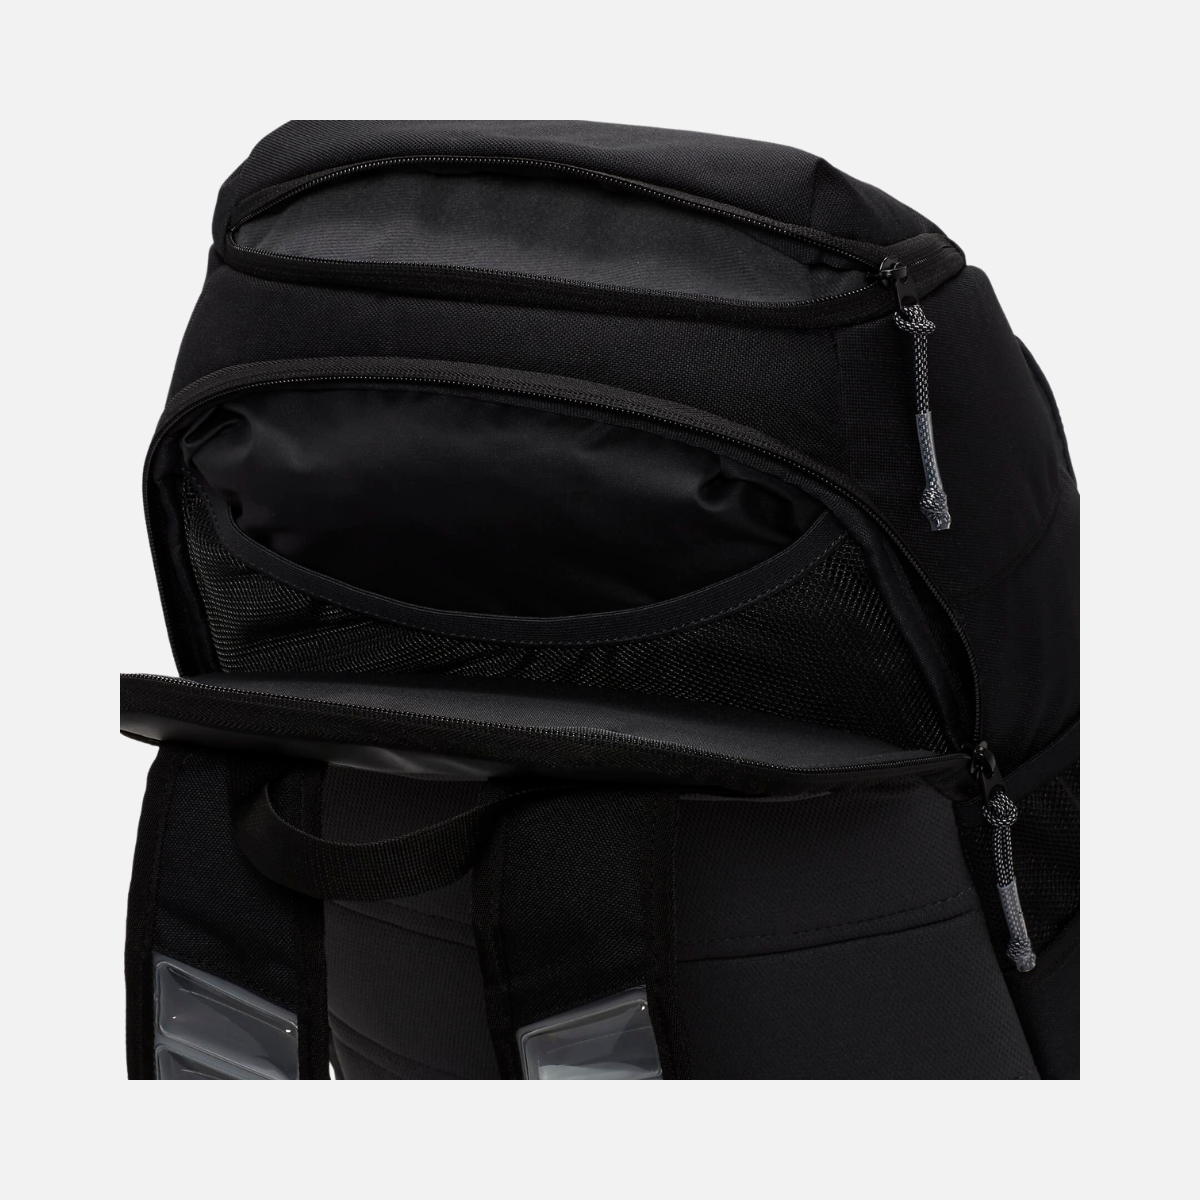 Nike Hoops Elite Backpack (32L) -Black/Anthracite/Metallic Silver